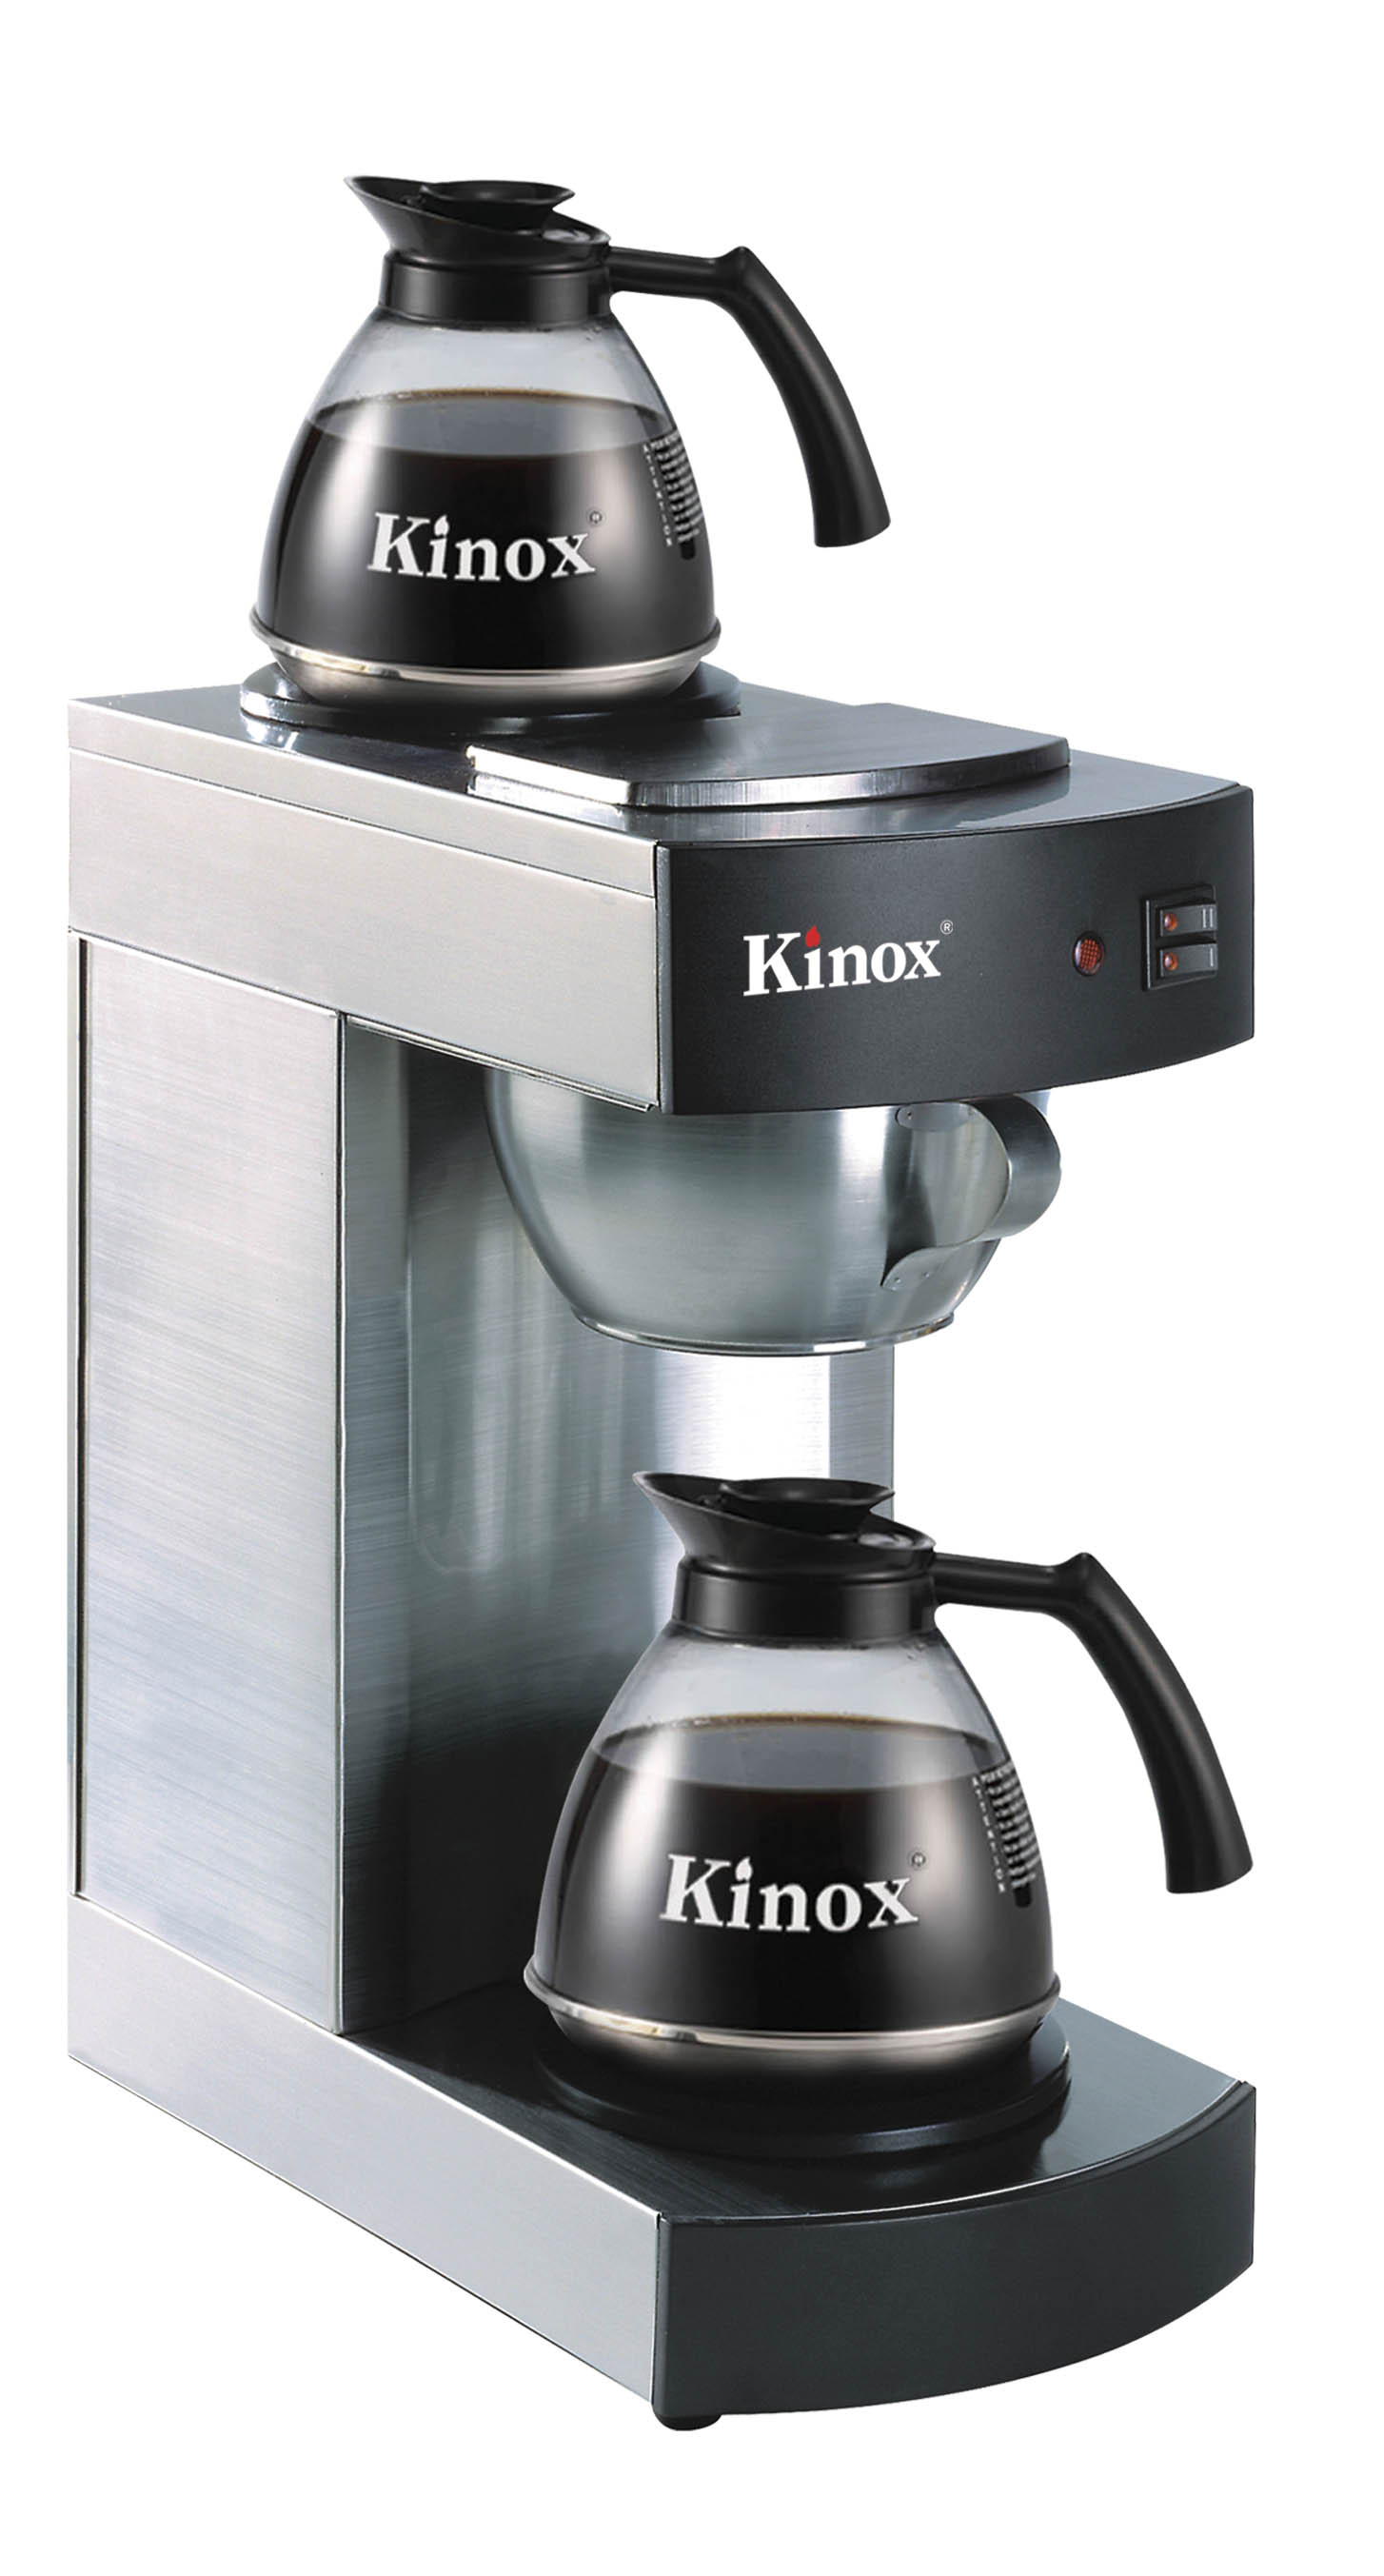 kinox-coffee-brewer-3304-rx-coffee-maker-kitchen-appliances-home-appliances